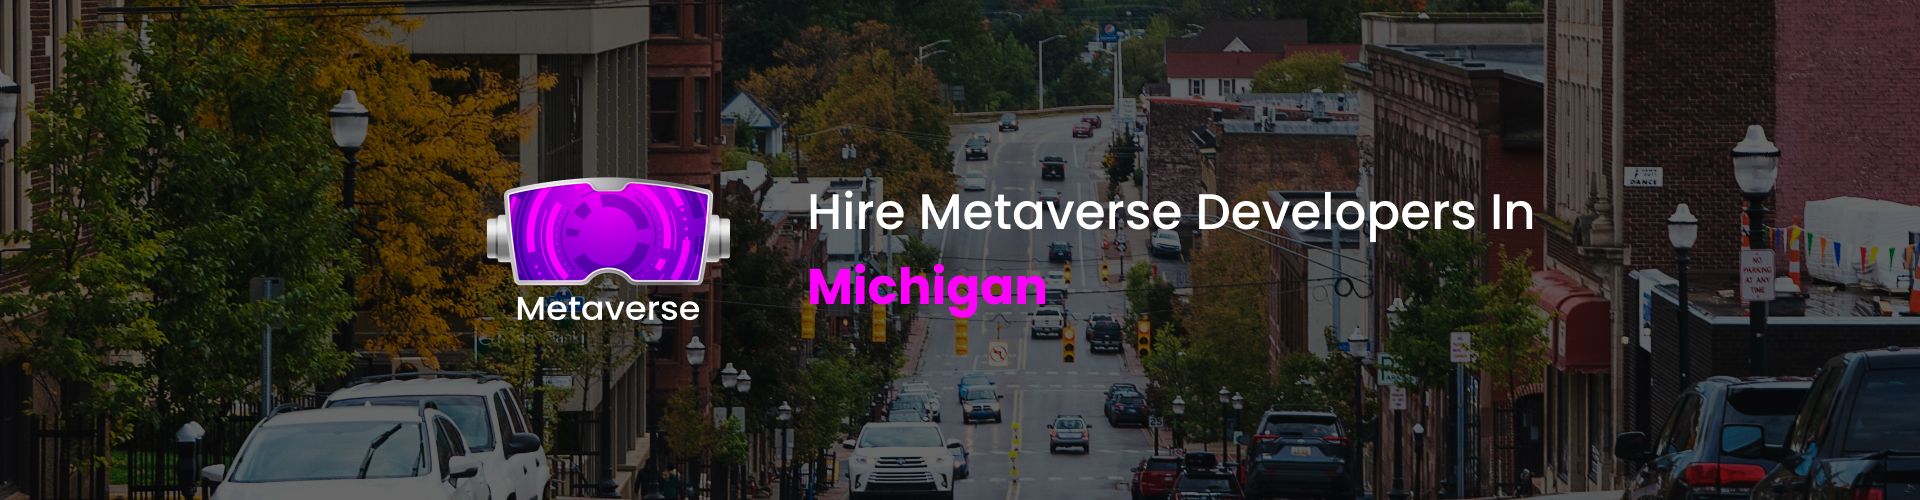 hire metaverse developers in michigan